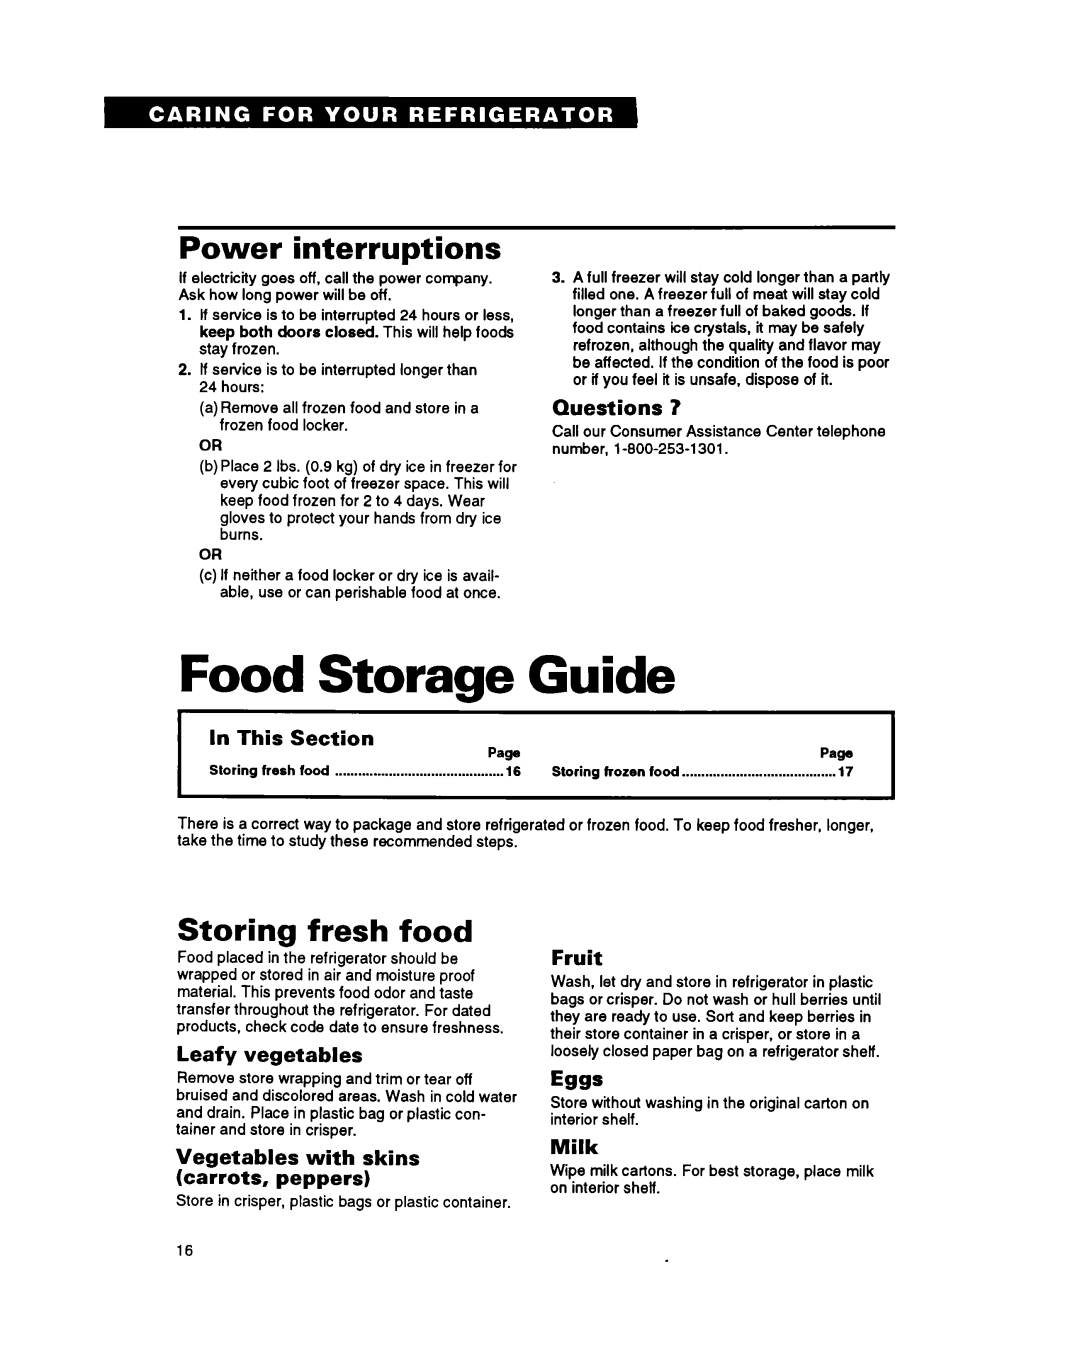 Whirlpool ETl8YK Food Storage Guide, Power interruptions, Storing fresh food, Quest ions, Leafy vegetables, Fruit, Milk 